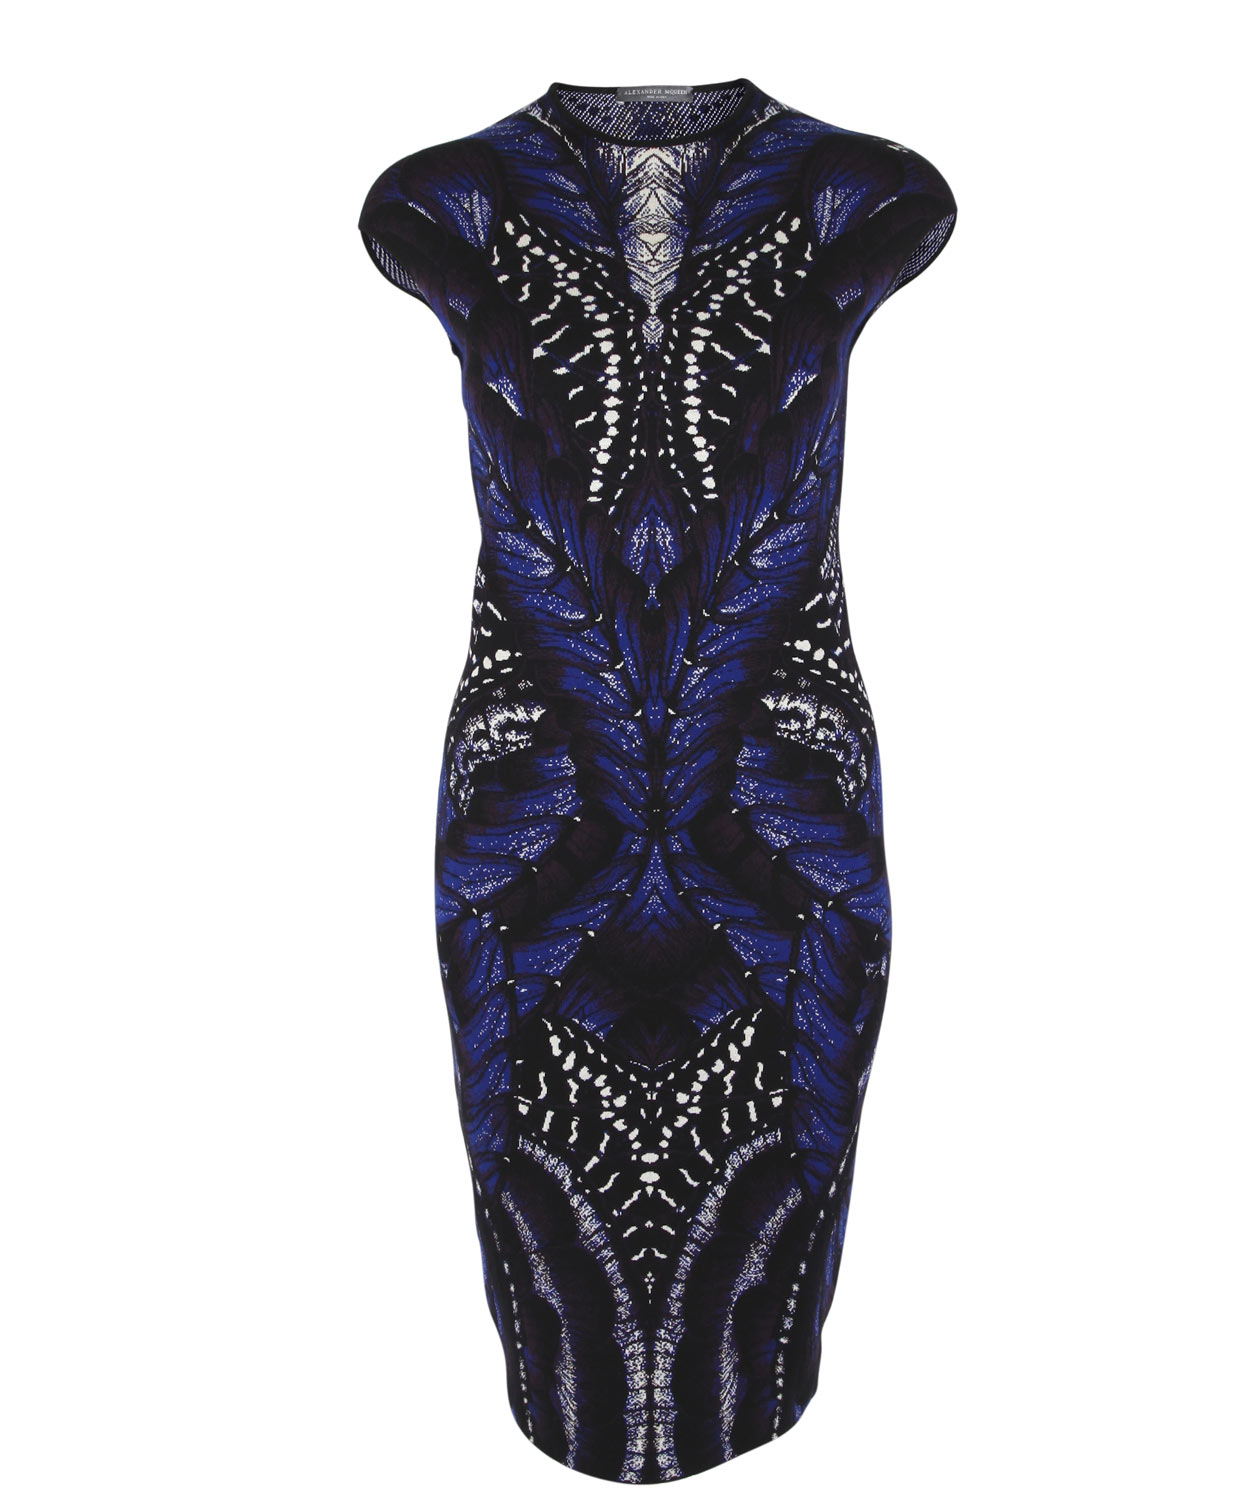 Lyst - Alexander Mcqueen Blue Butterfly Print Intarsia Pencil Dress in Blue